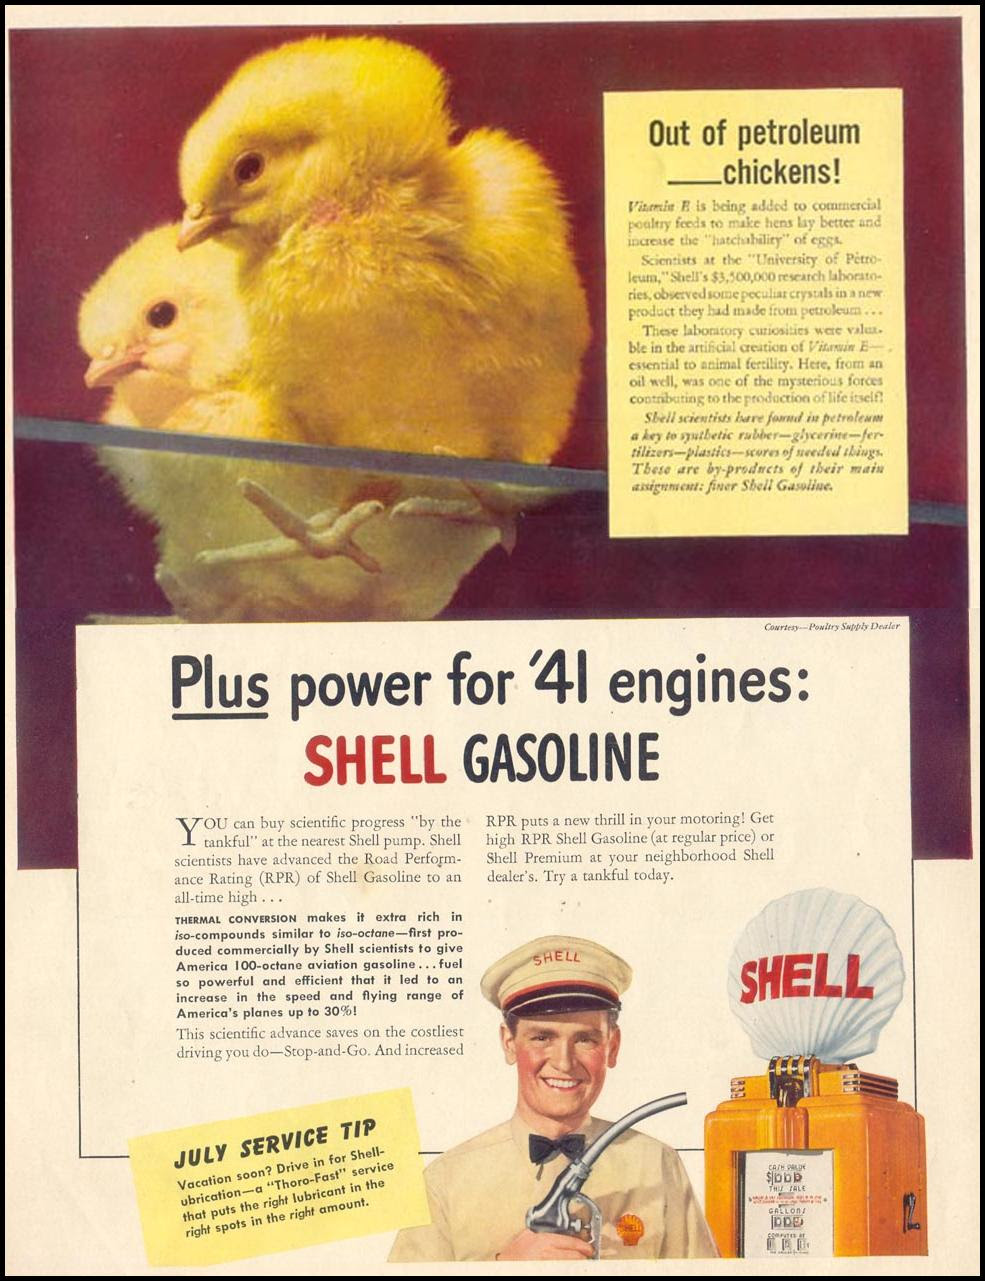 SHELL GASOLINE
LIFE
06/23/1941